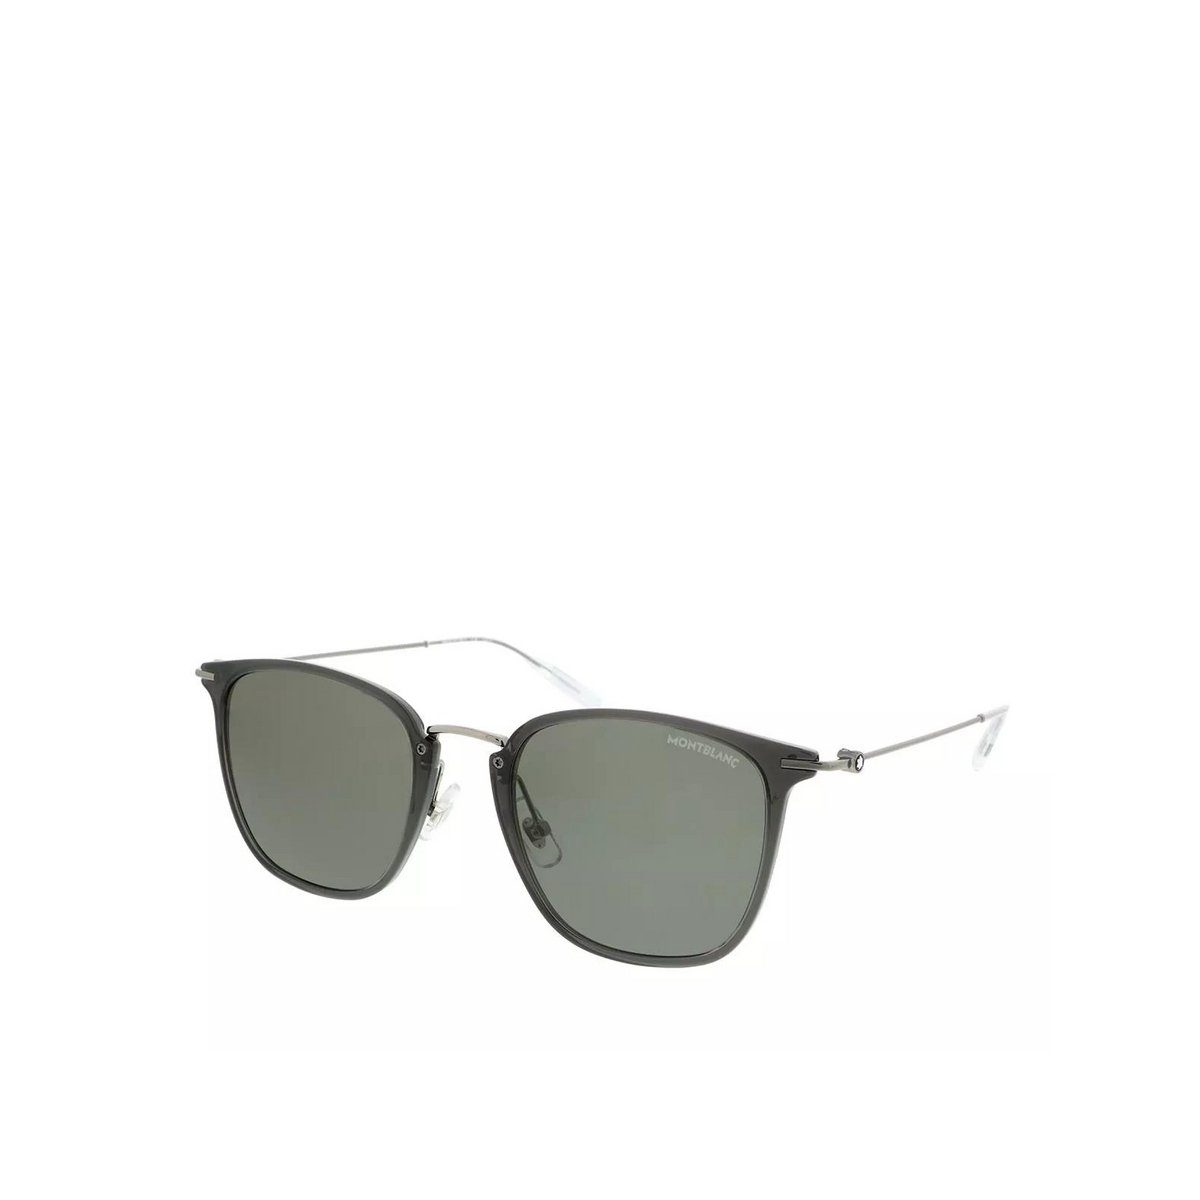 MONTBLANC Sonnenbrille grau (1-St)